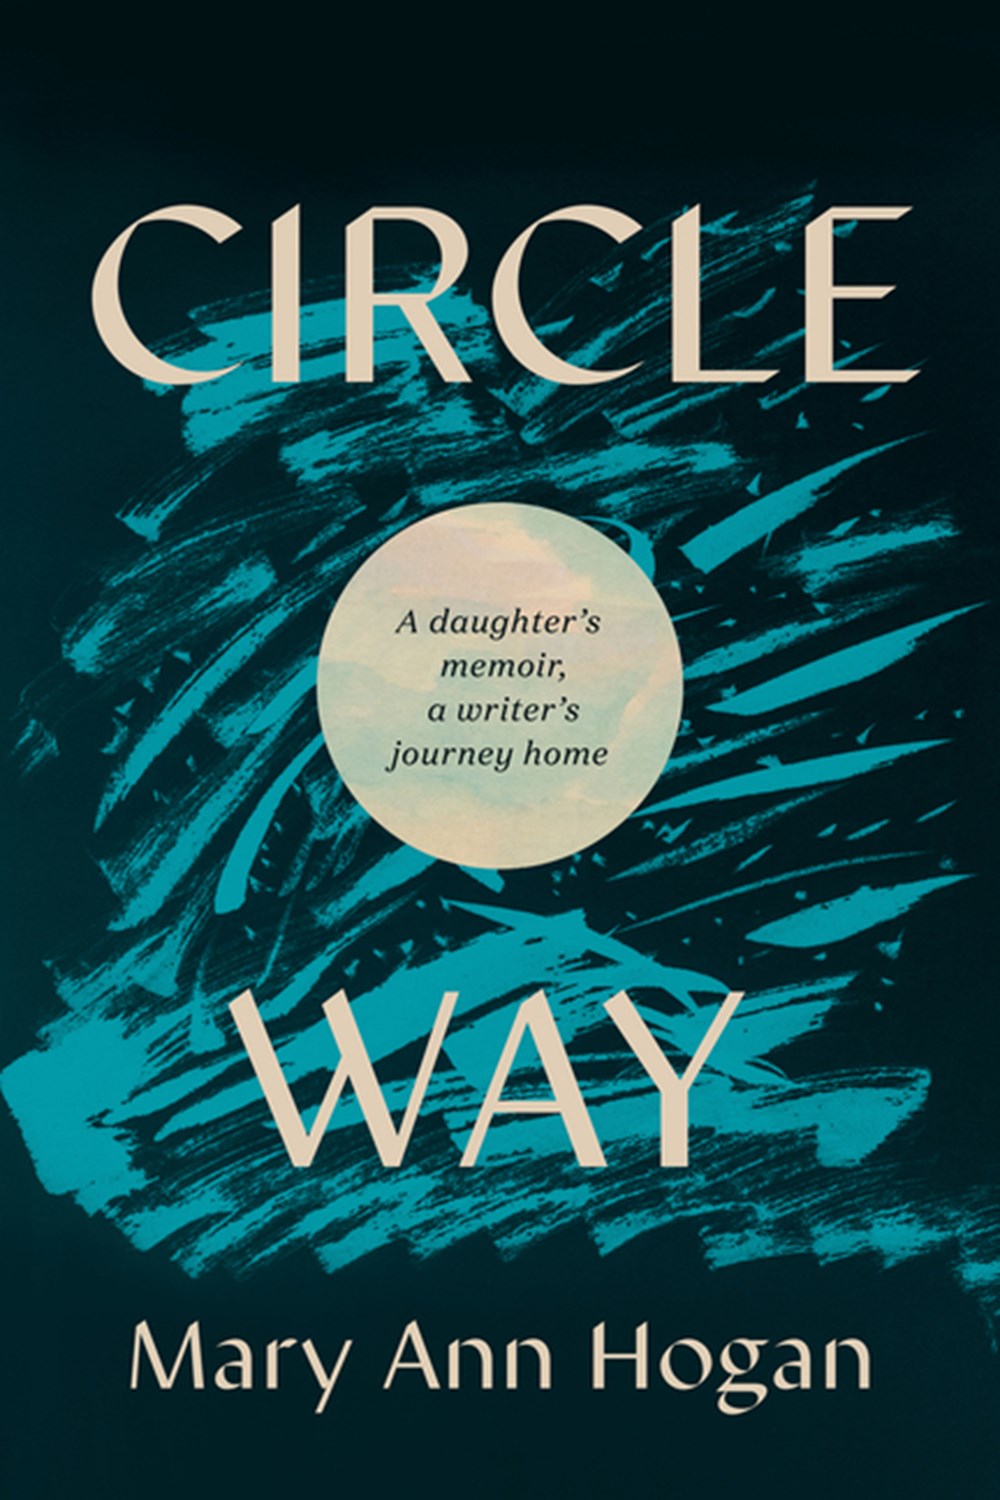 Circle Way A Daughter's Memoir, a Writer's Journey Home